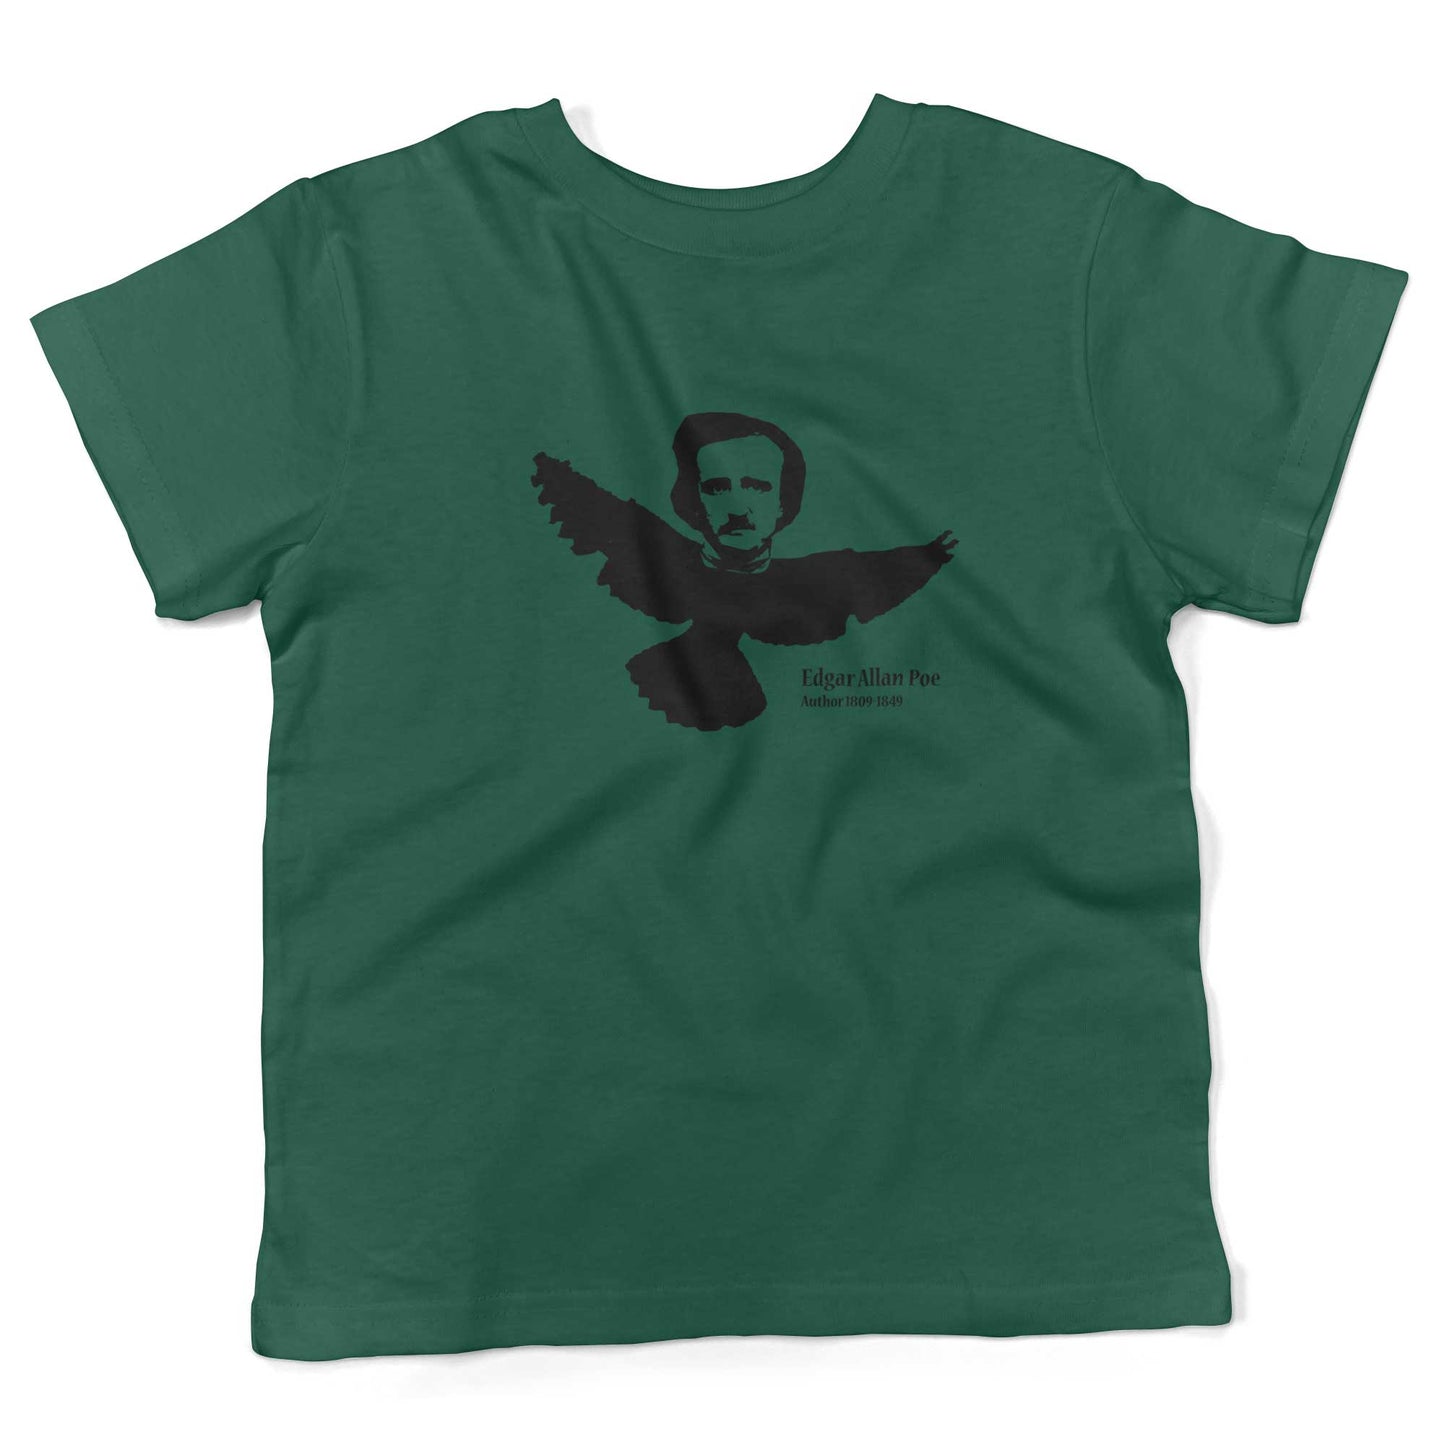 Edgar Allan Poe Toddler Shirt-Kelly Green-2T